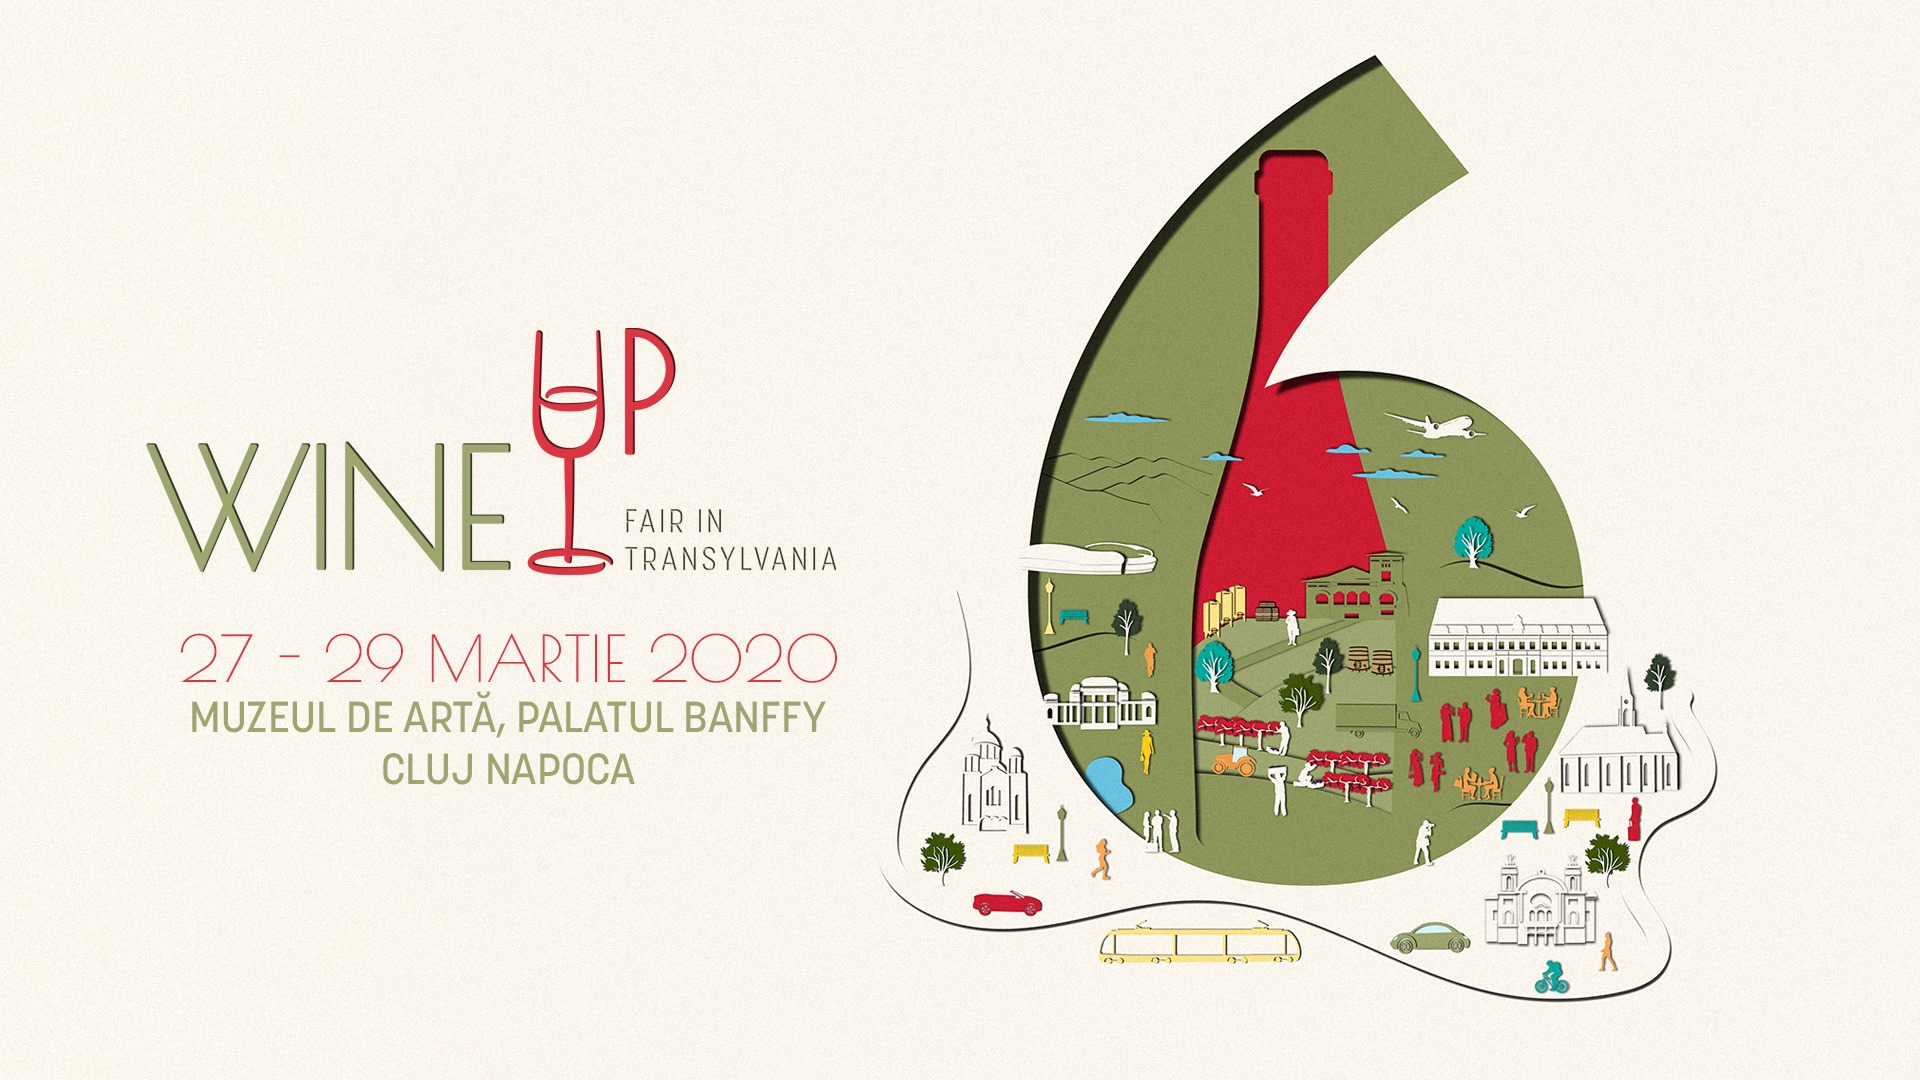 WineUp Fair in Transylvania